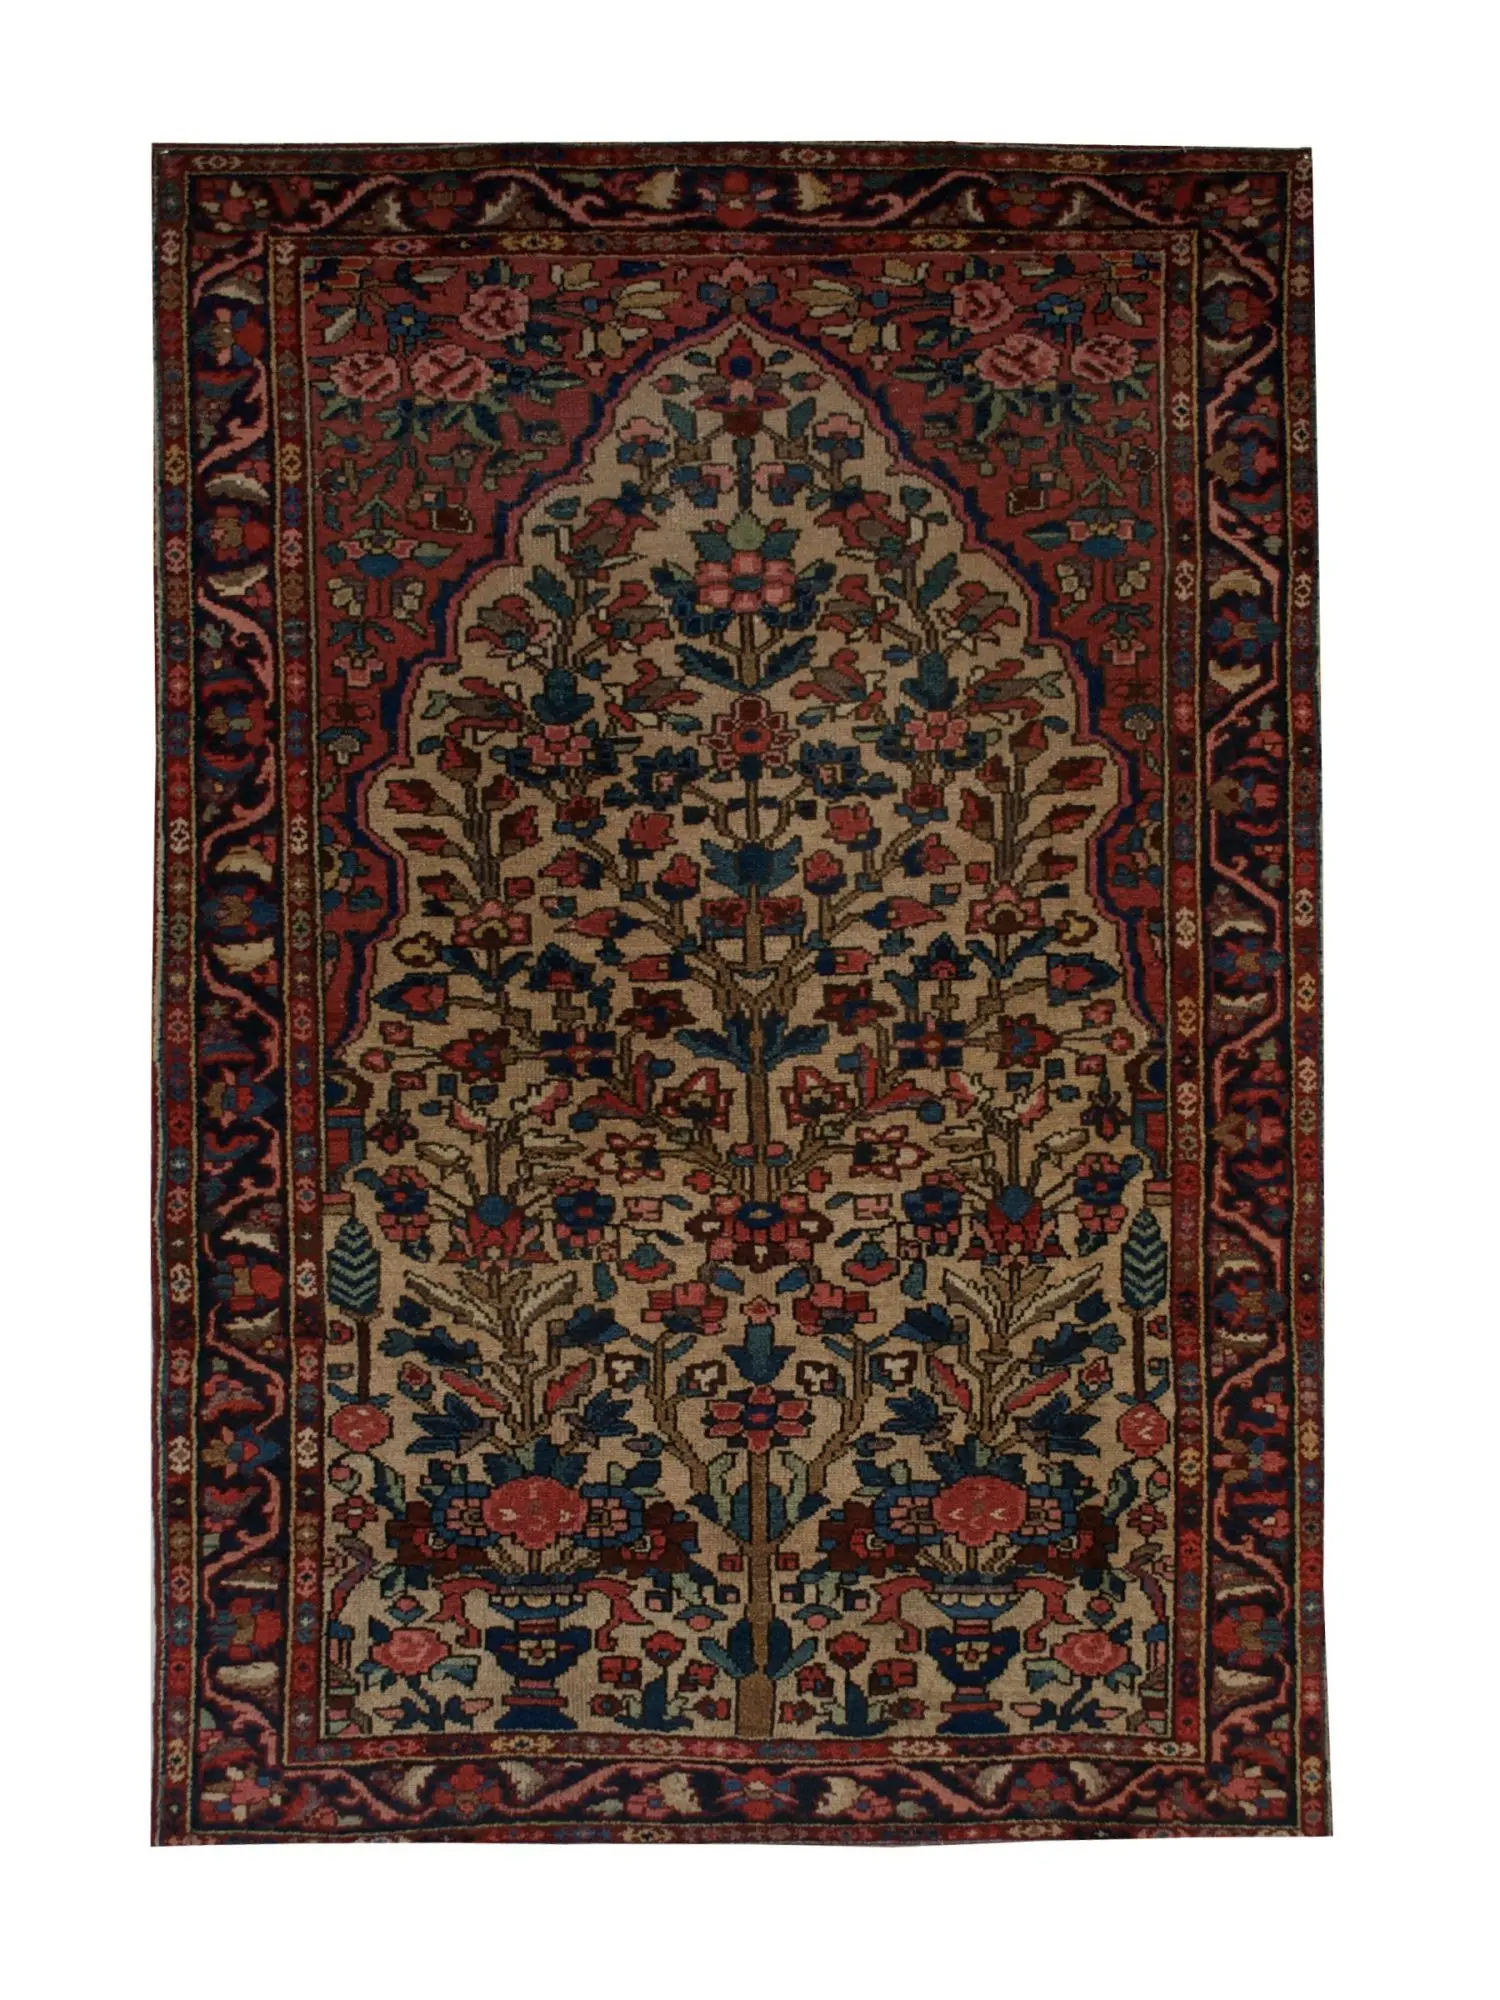 Antique Persian Bakhtiari rug 4' 5" x 6' 5" Handmade Wool Area Rug - Shabahang Royal Carpet